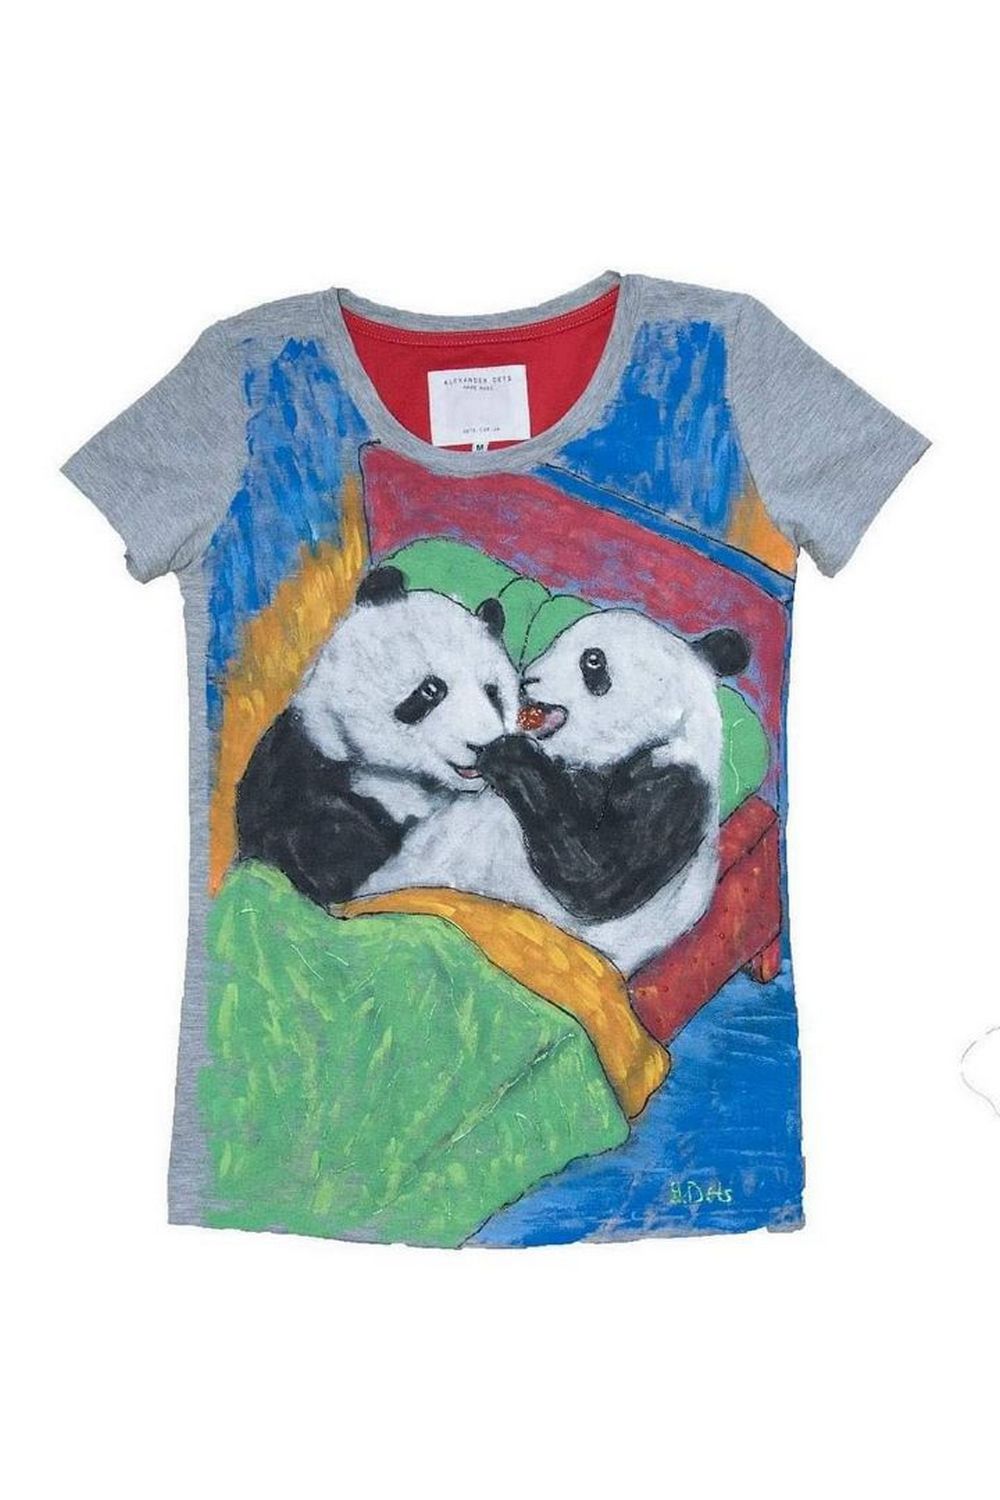 Buy Gray Cotton Print Comfortable Funny Women Men tee shirt , Short sleeve Panda tshirt, Unique stylish t shirt